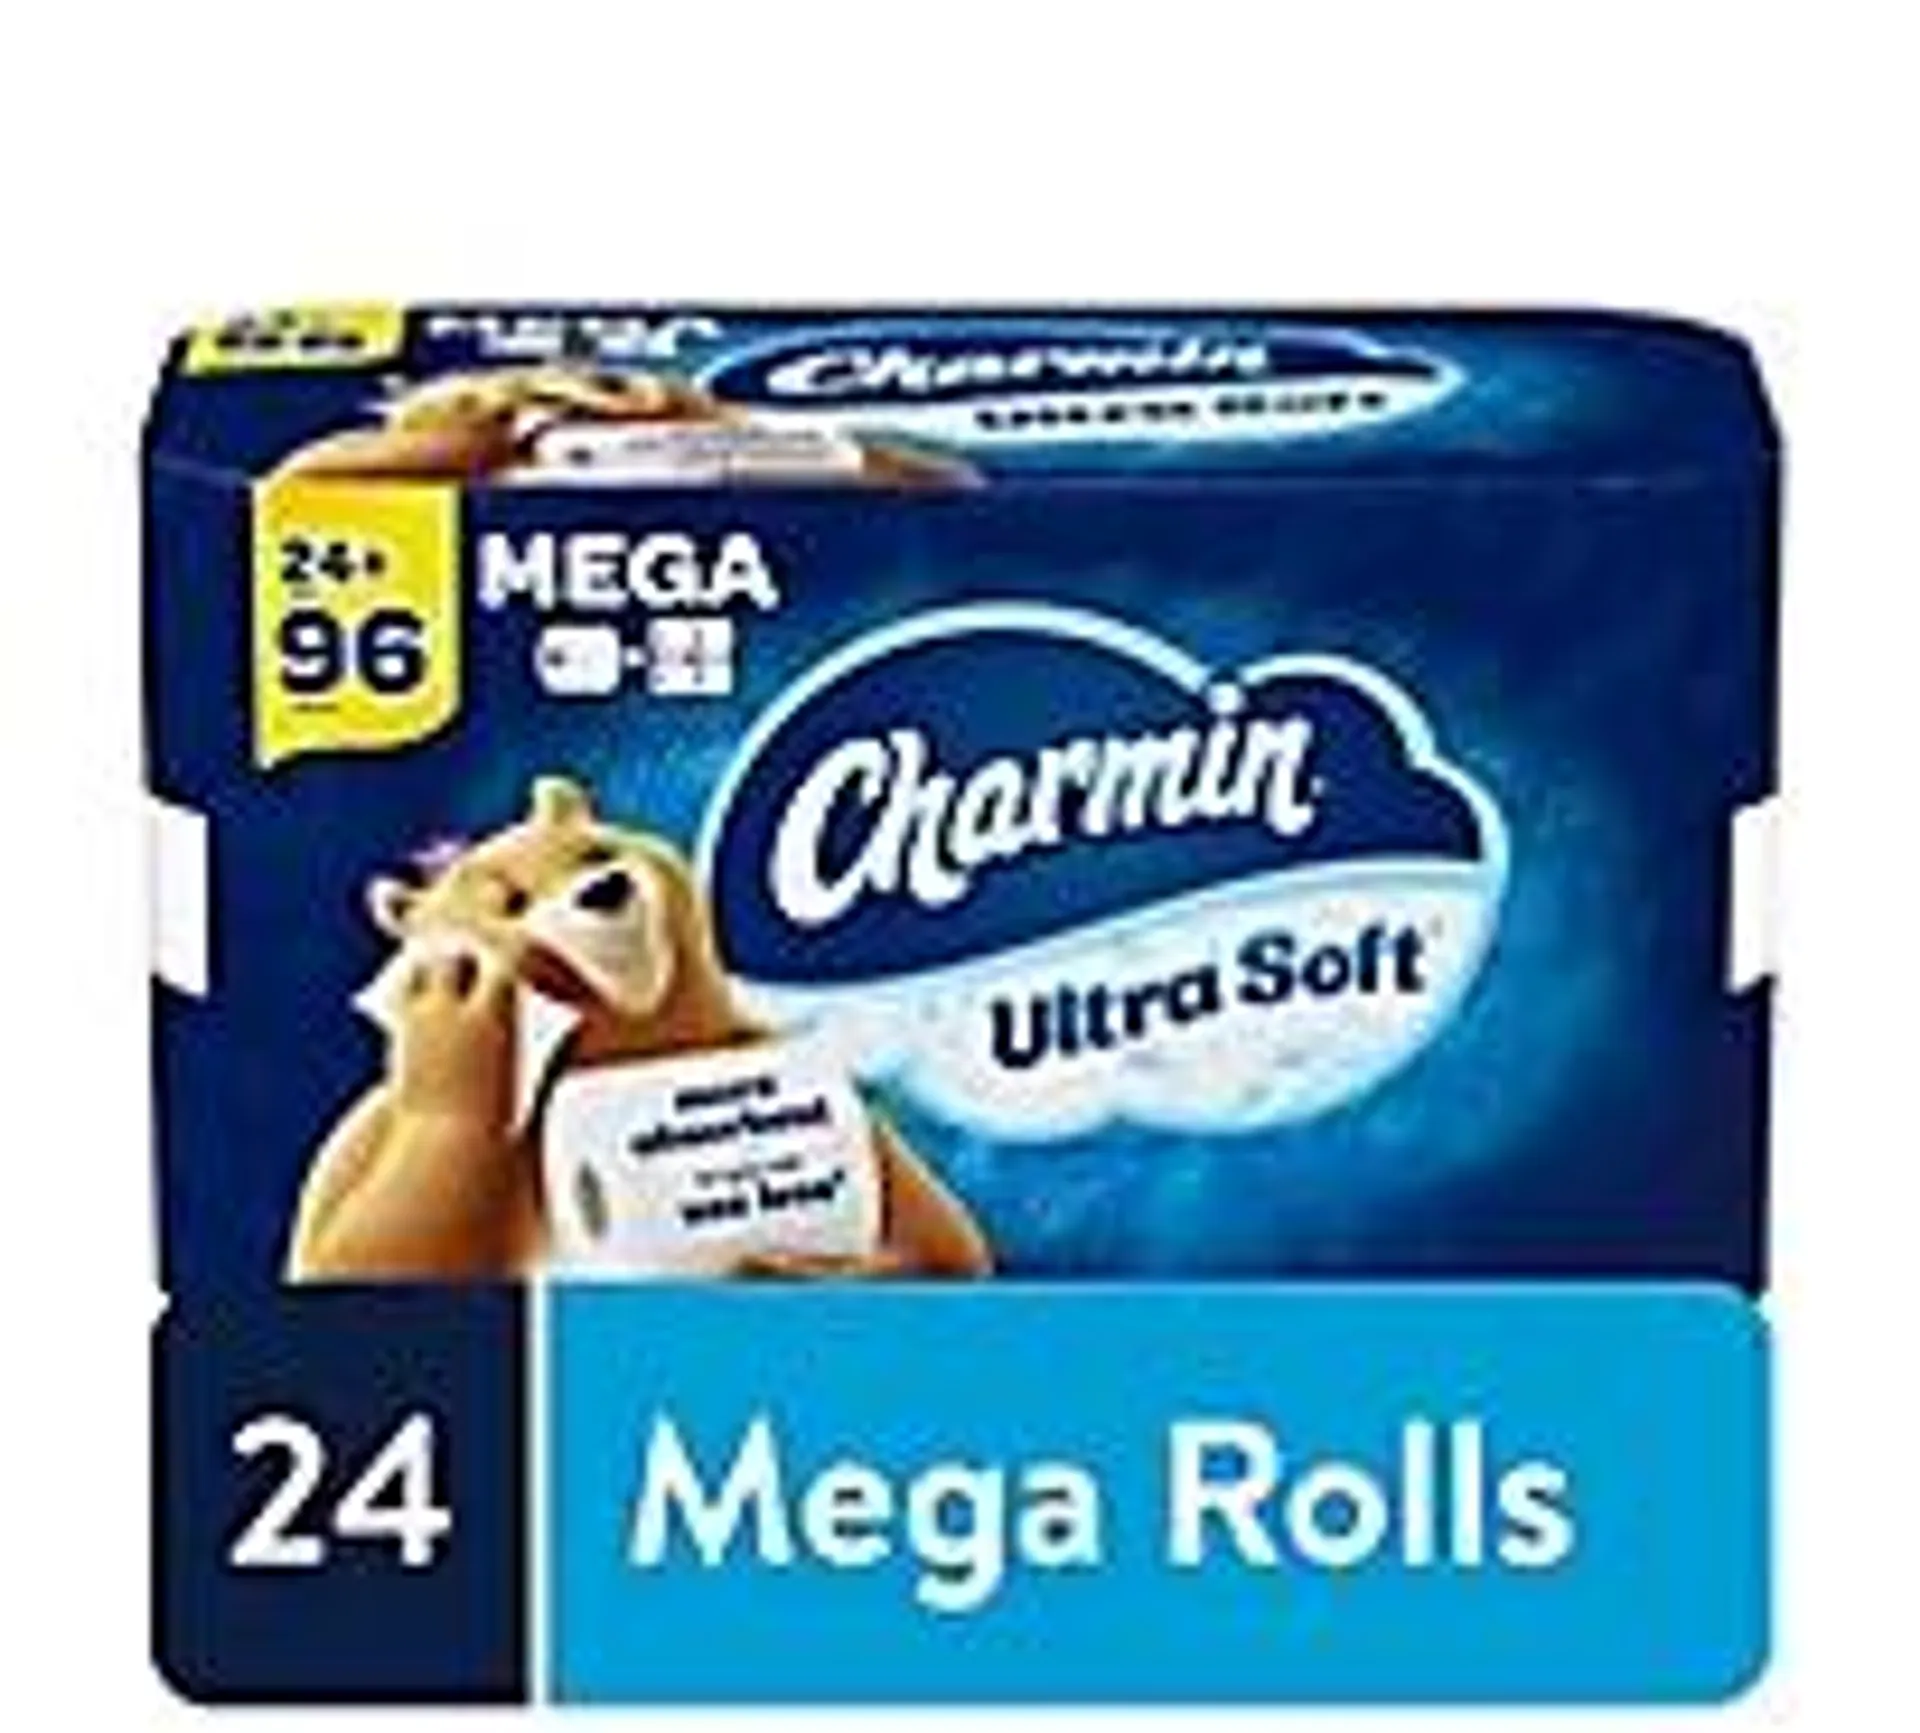 Charmin Bath Tissue Ult Soft Mega - 24 Roll